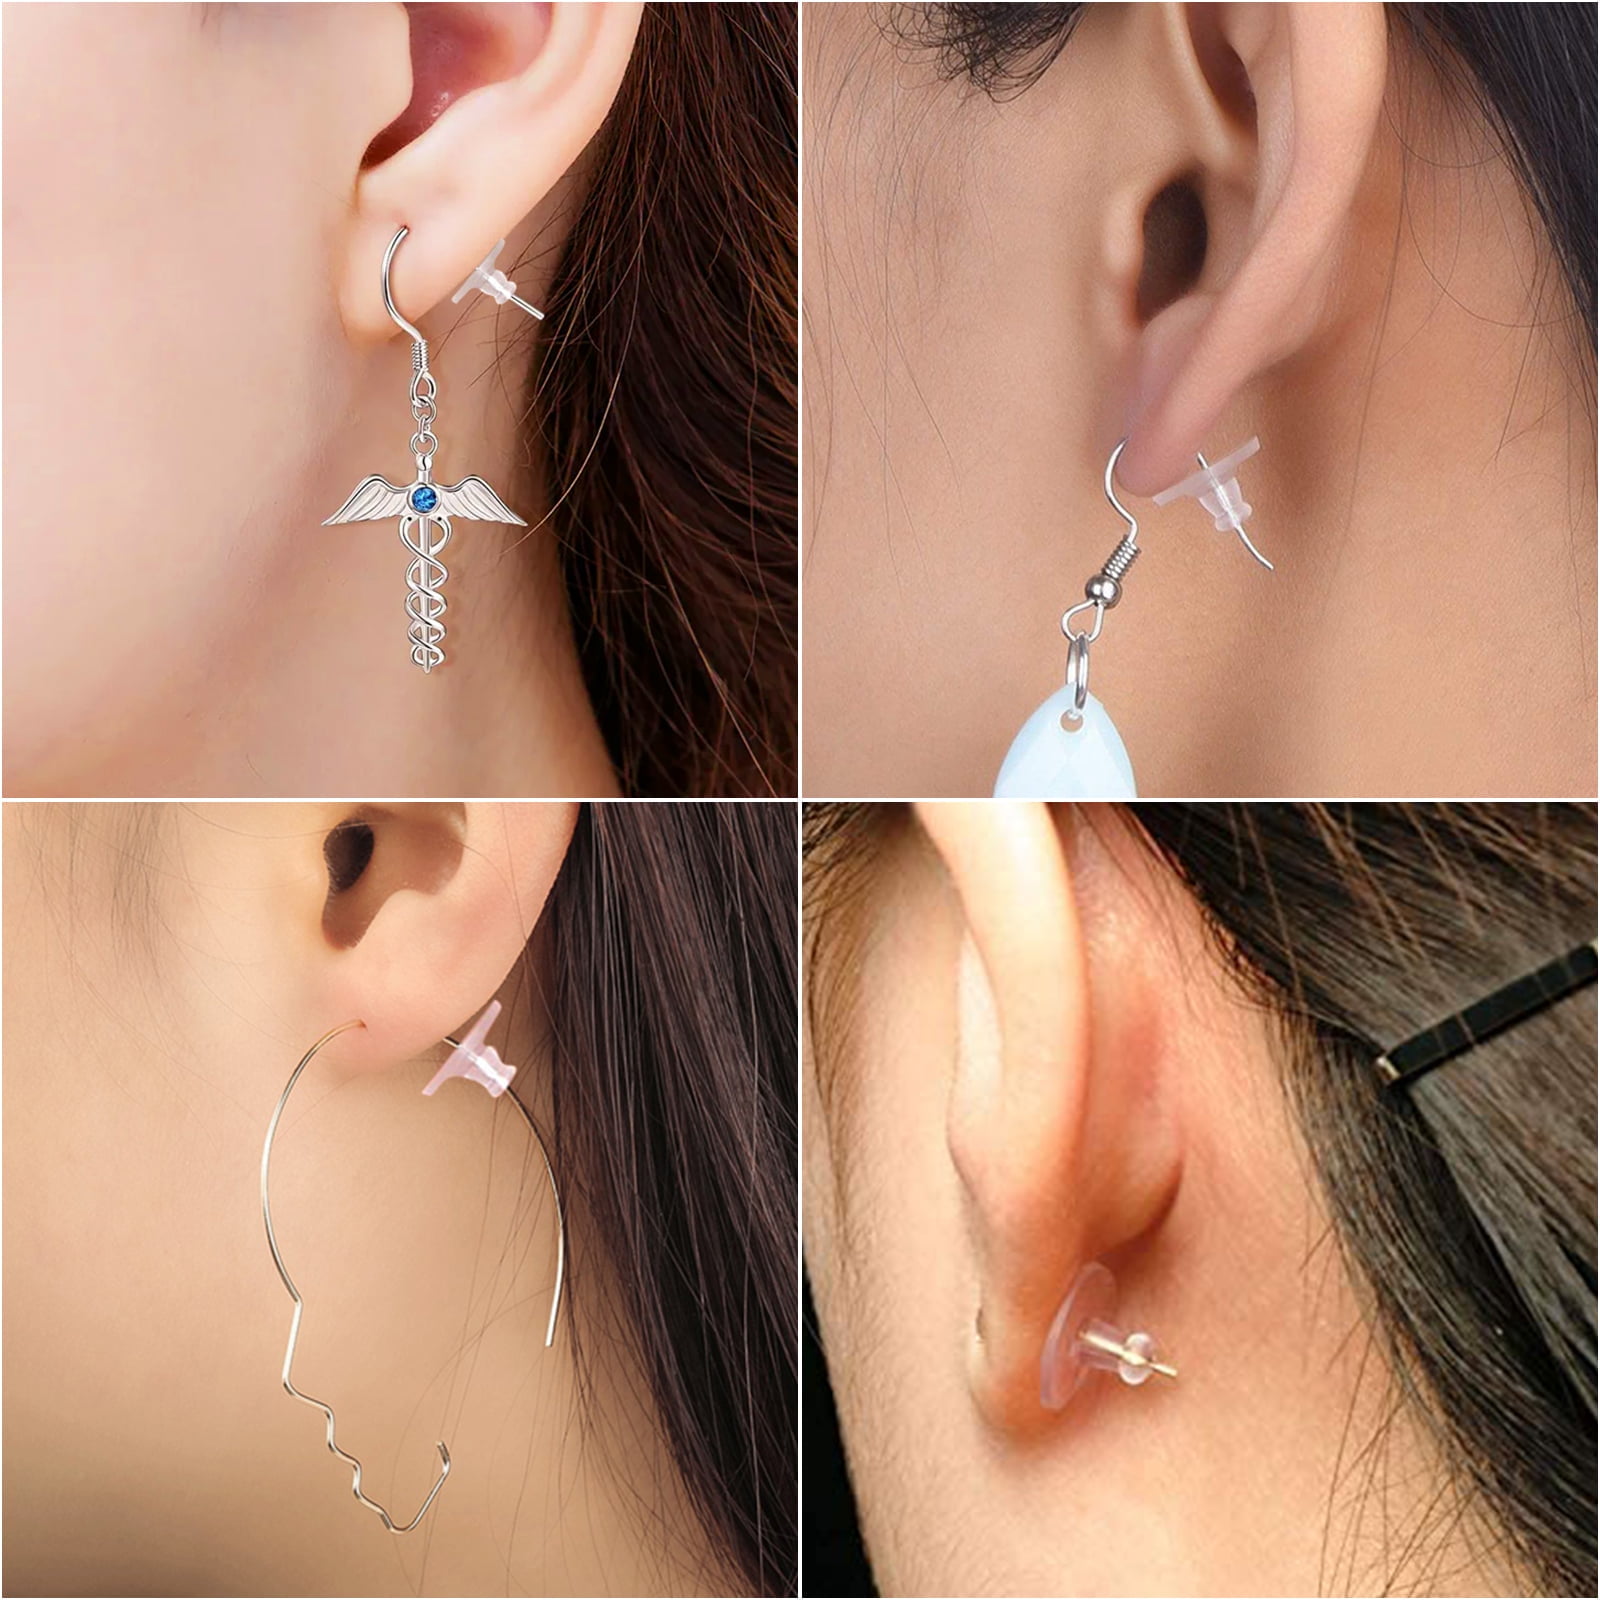  COHEALI Rubber Earring Backs Piercing Kit 2000pcs Silicone Ear  Plugs Earring Backs for Earring Finding Prevent Allergy Silica Gel Ear Caps  Plastic Earrings Earring Backs for Studs